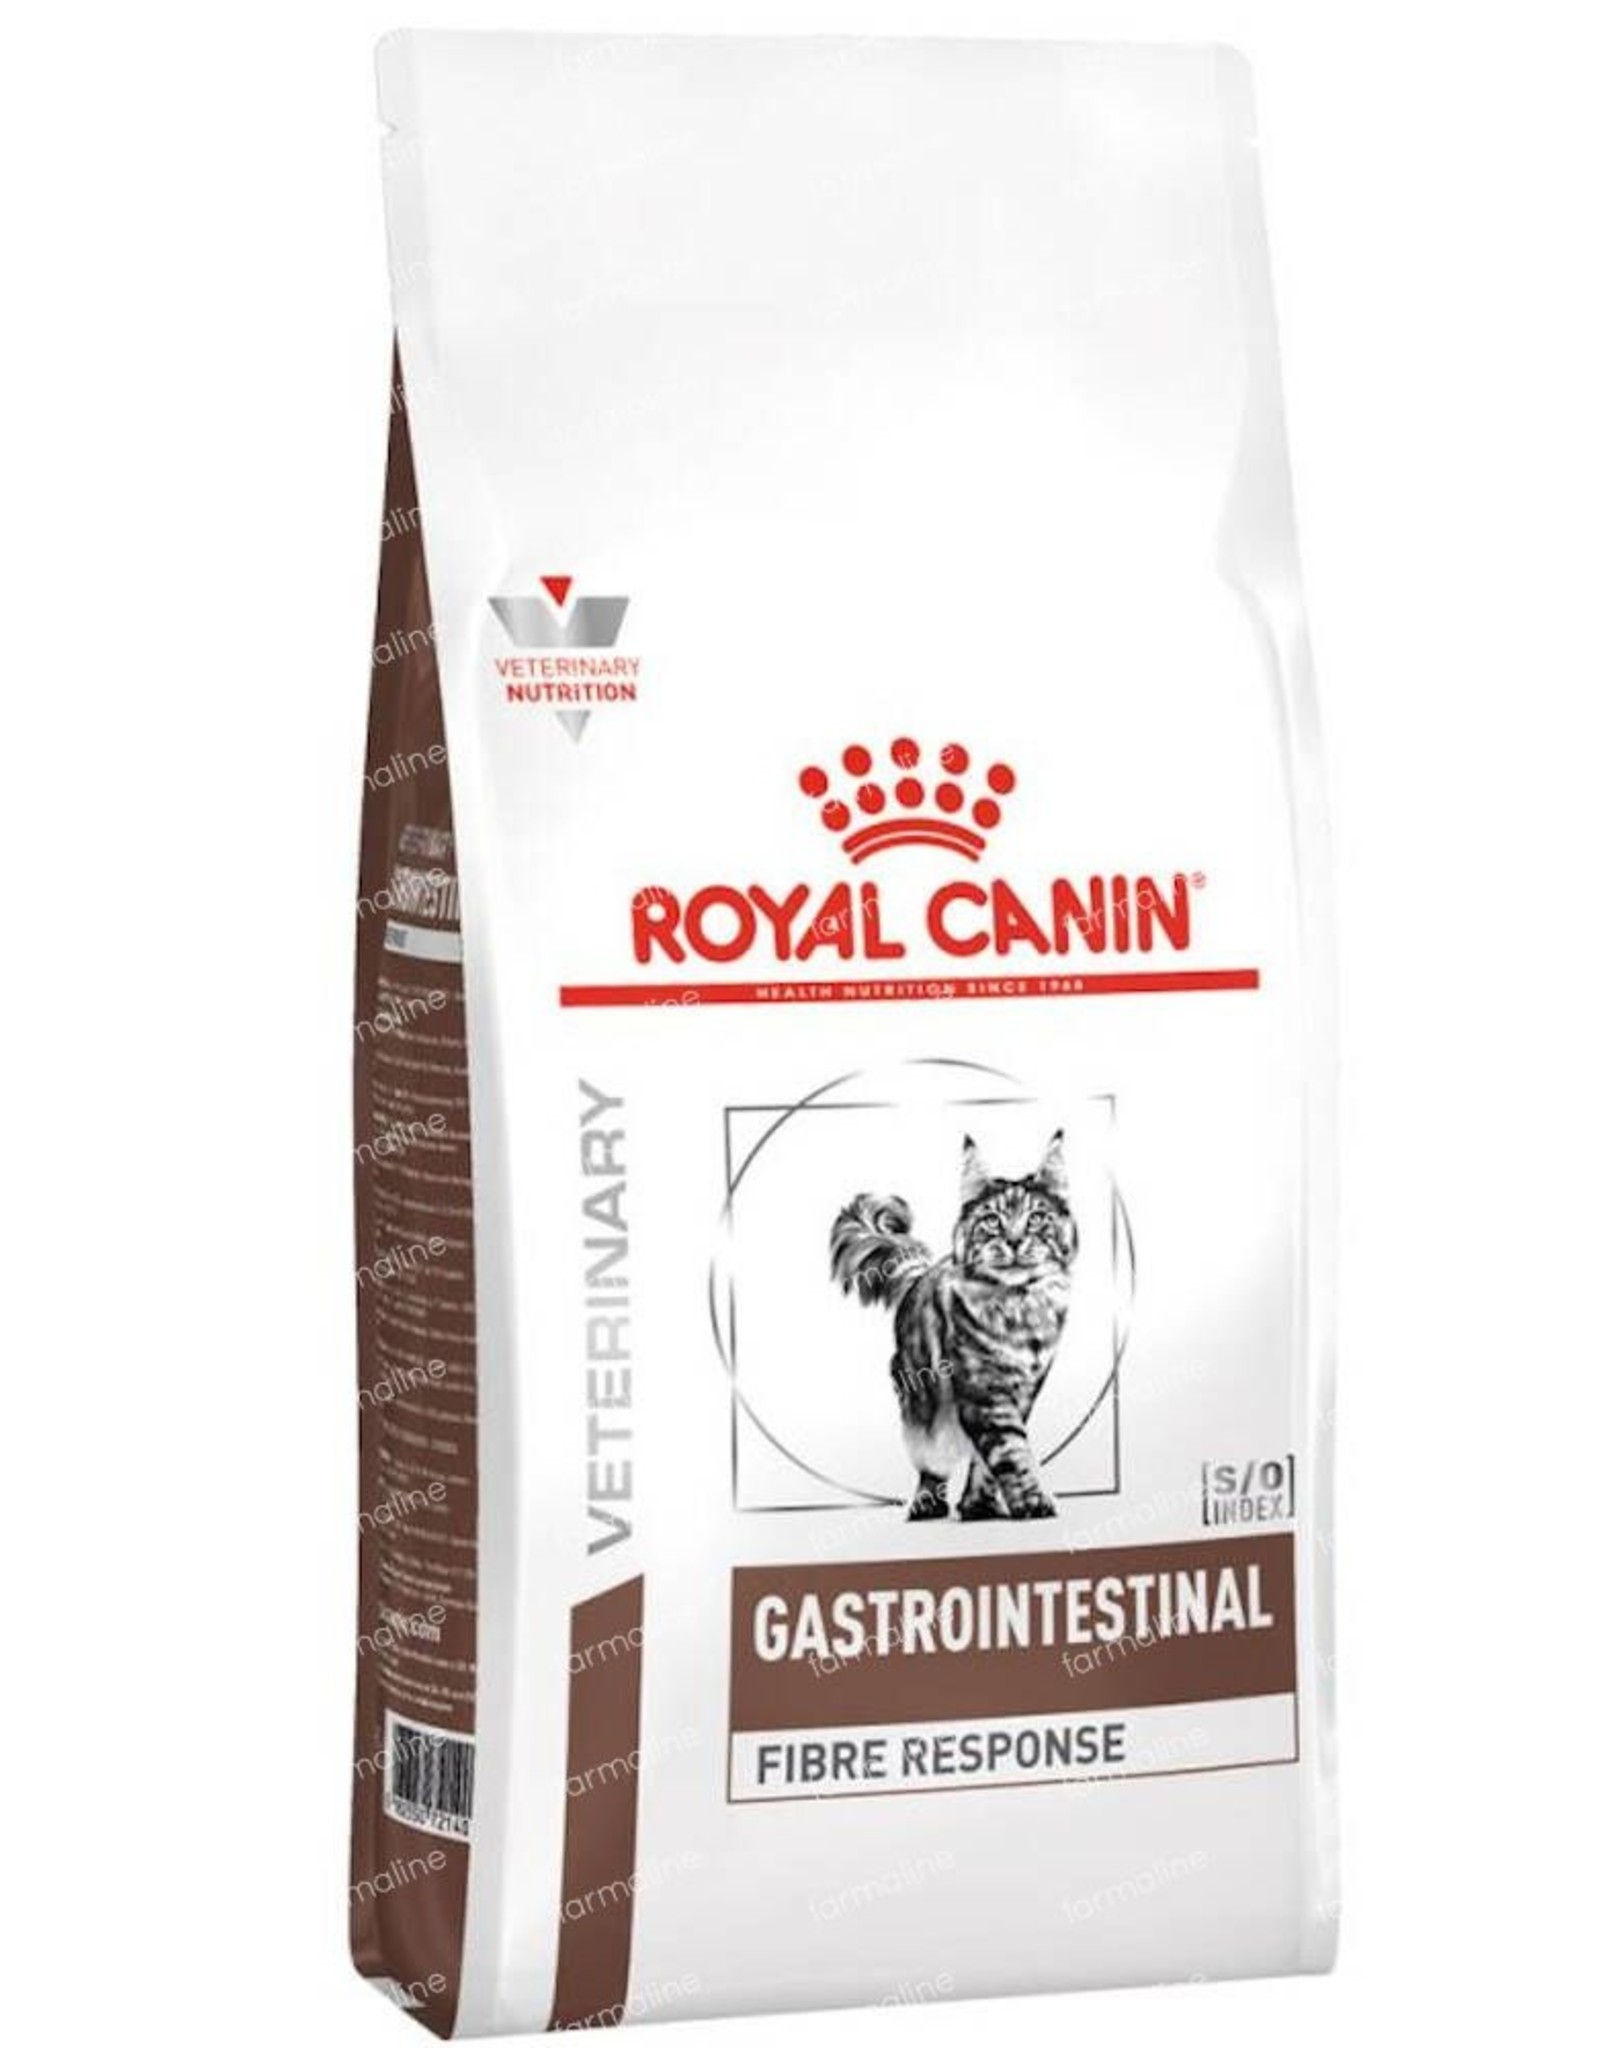 Royal Canin Royal Canin Fiber Response Katze 2kg